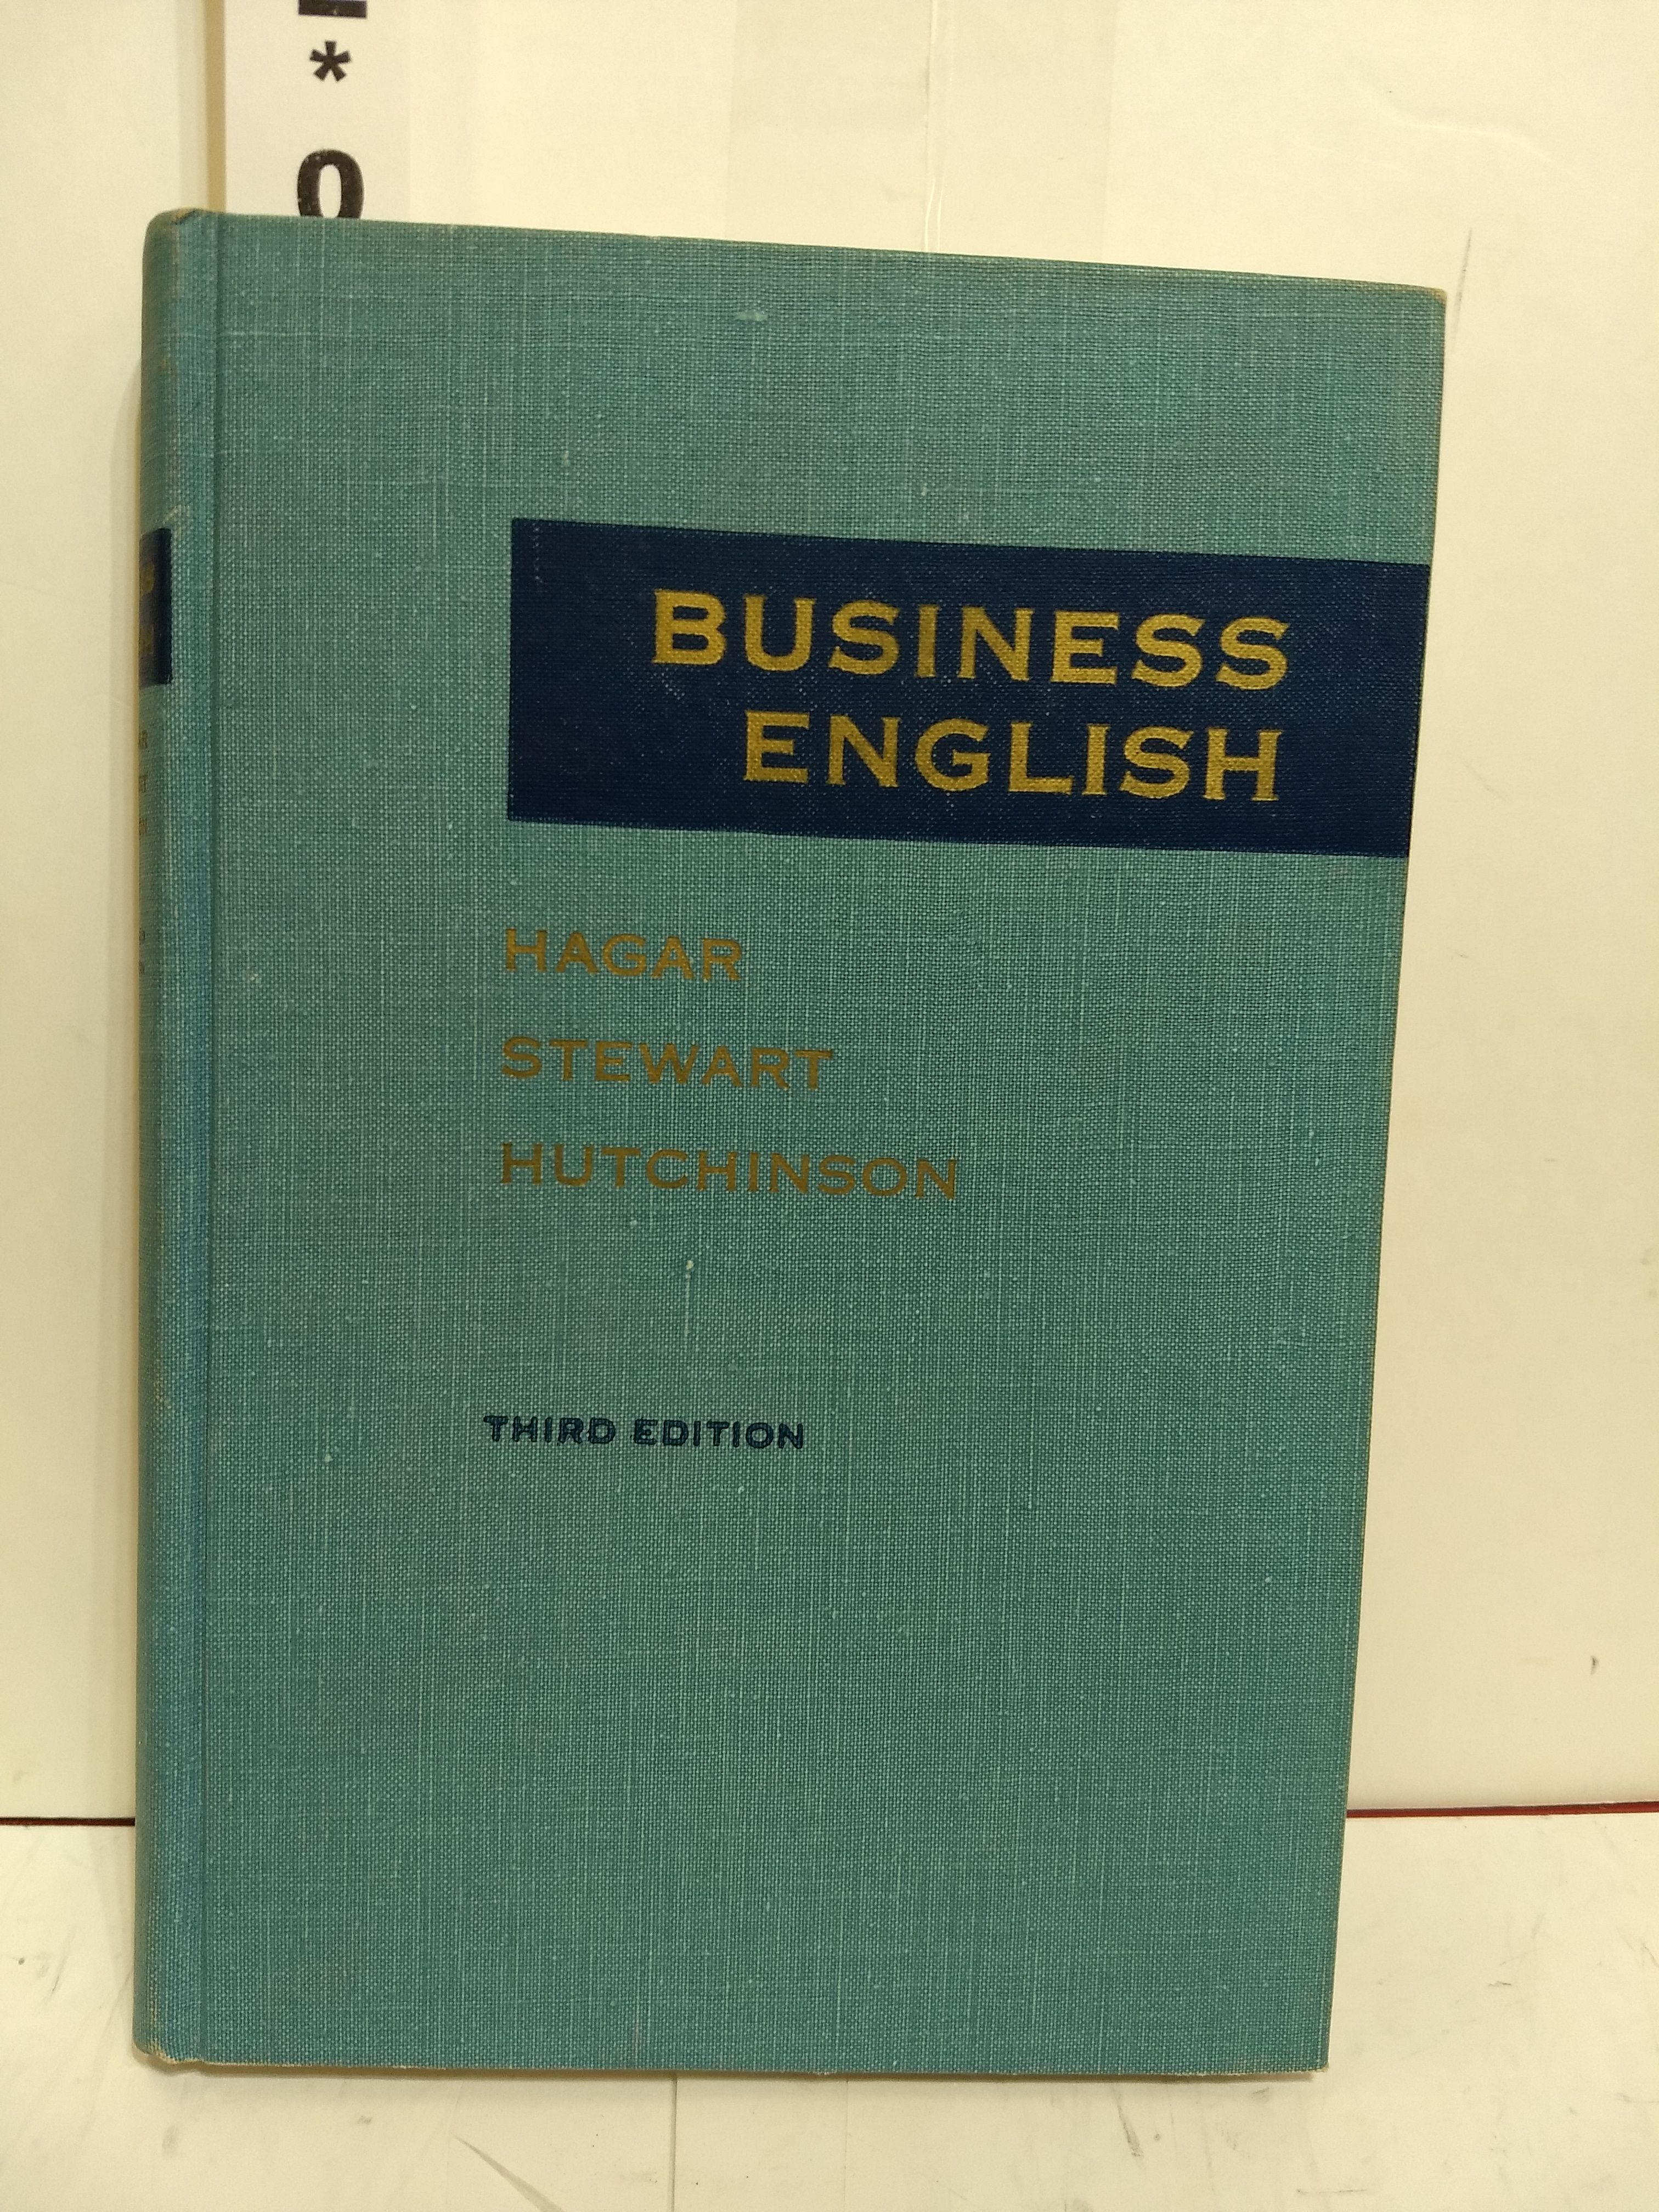 Business English Third Edition - Hagar, Stewart, Hutchinson